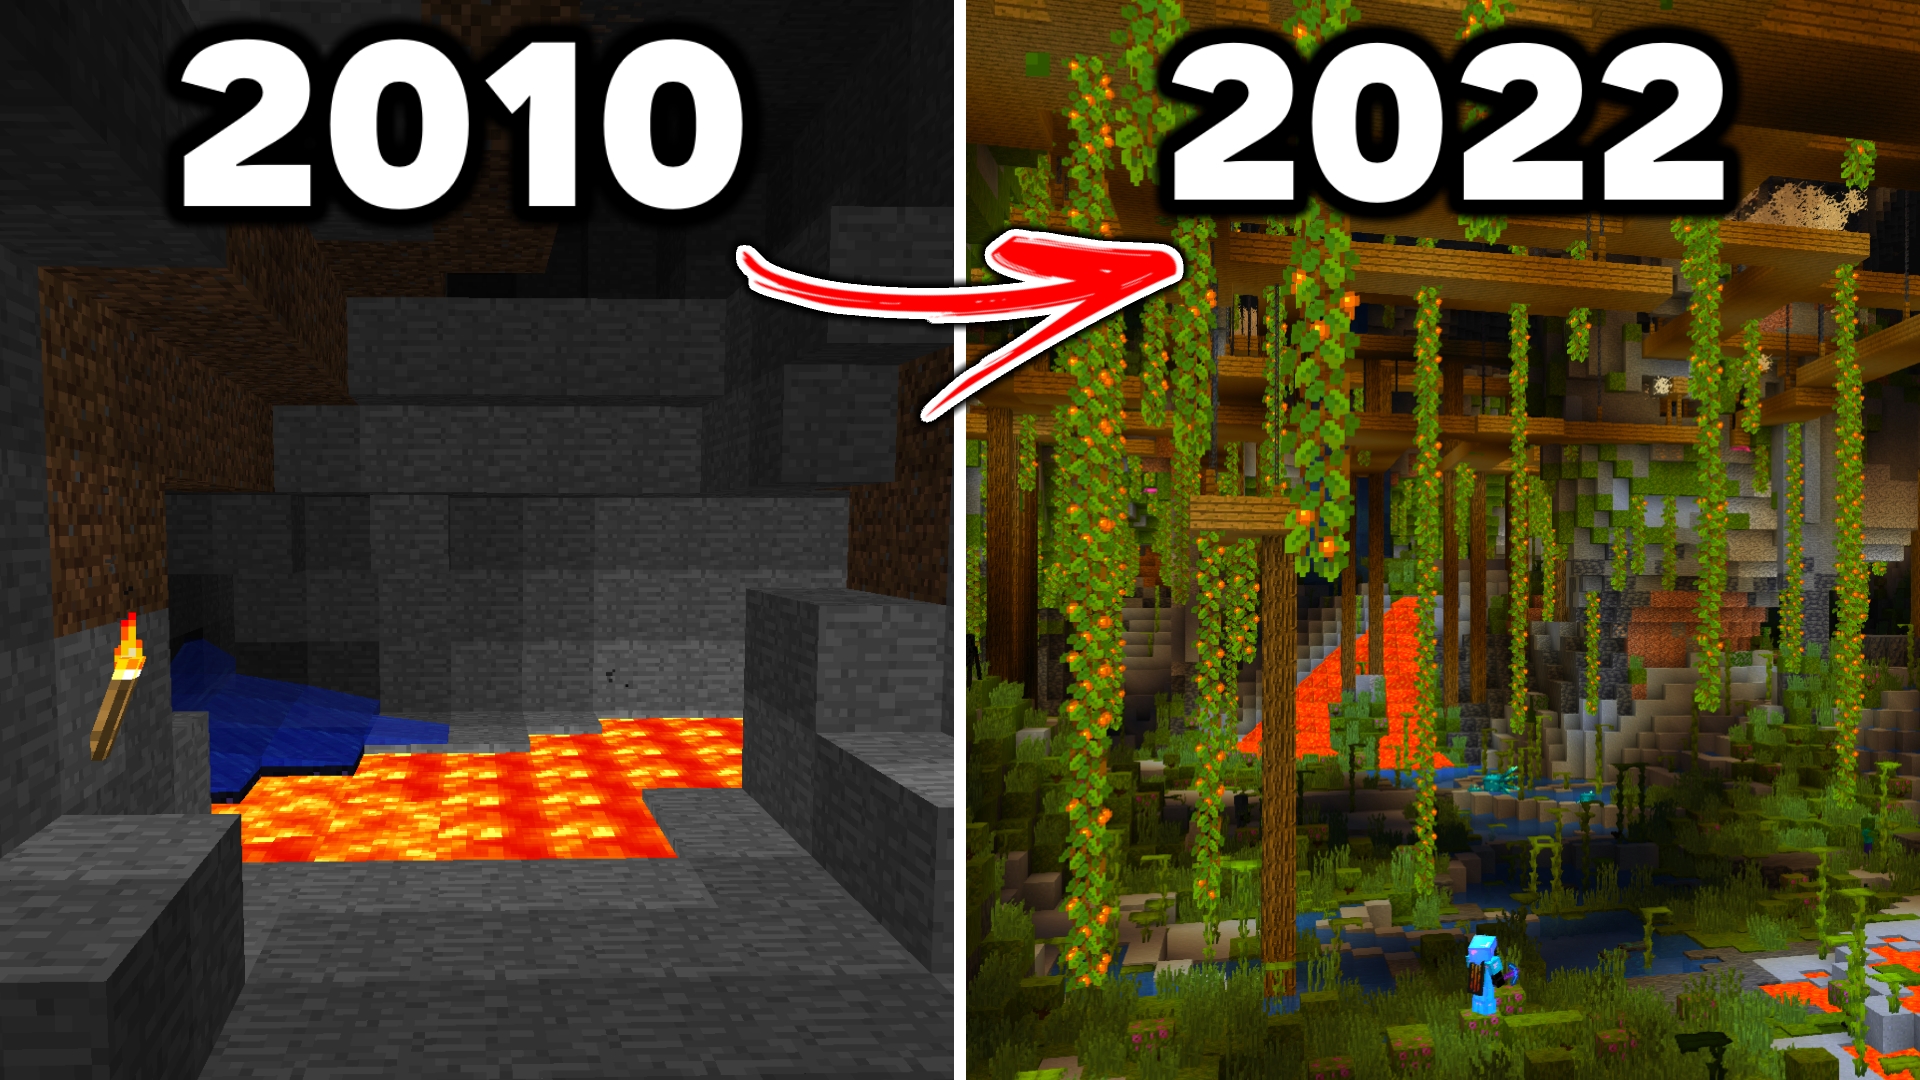 The evolution of Minecraft 